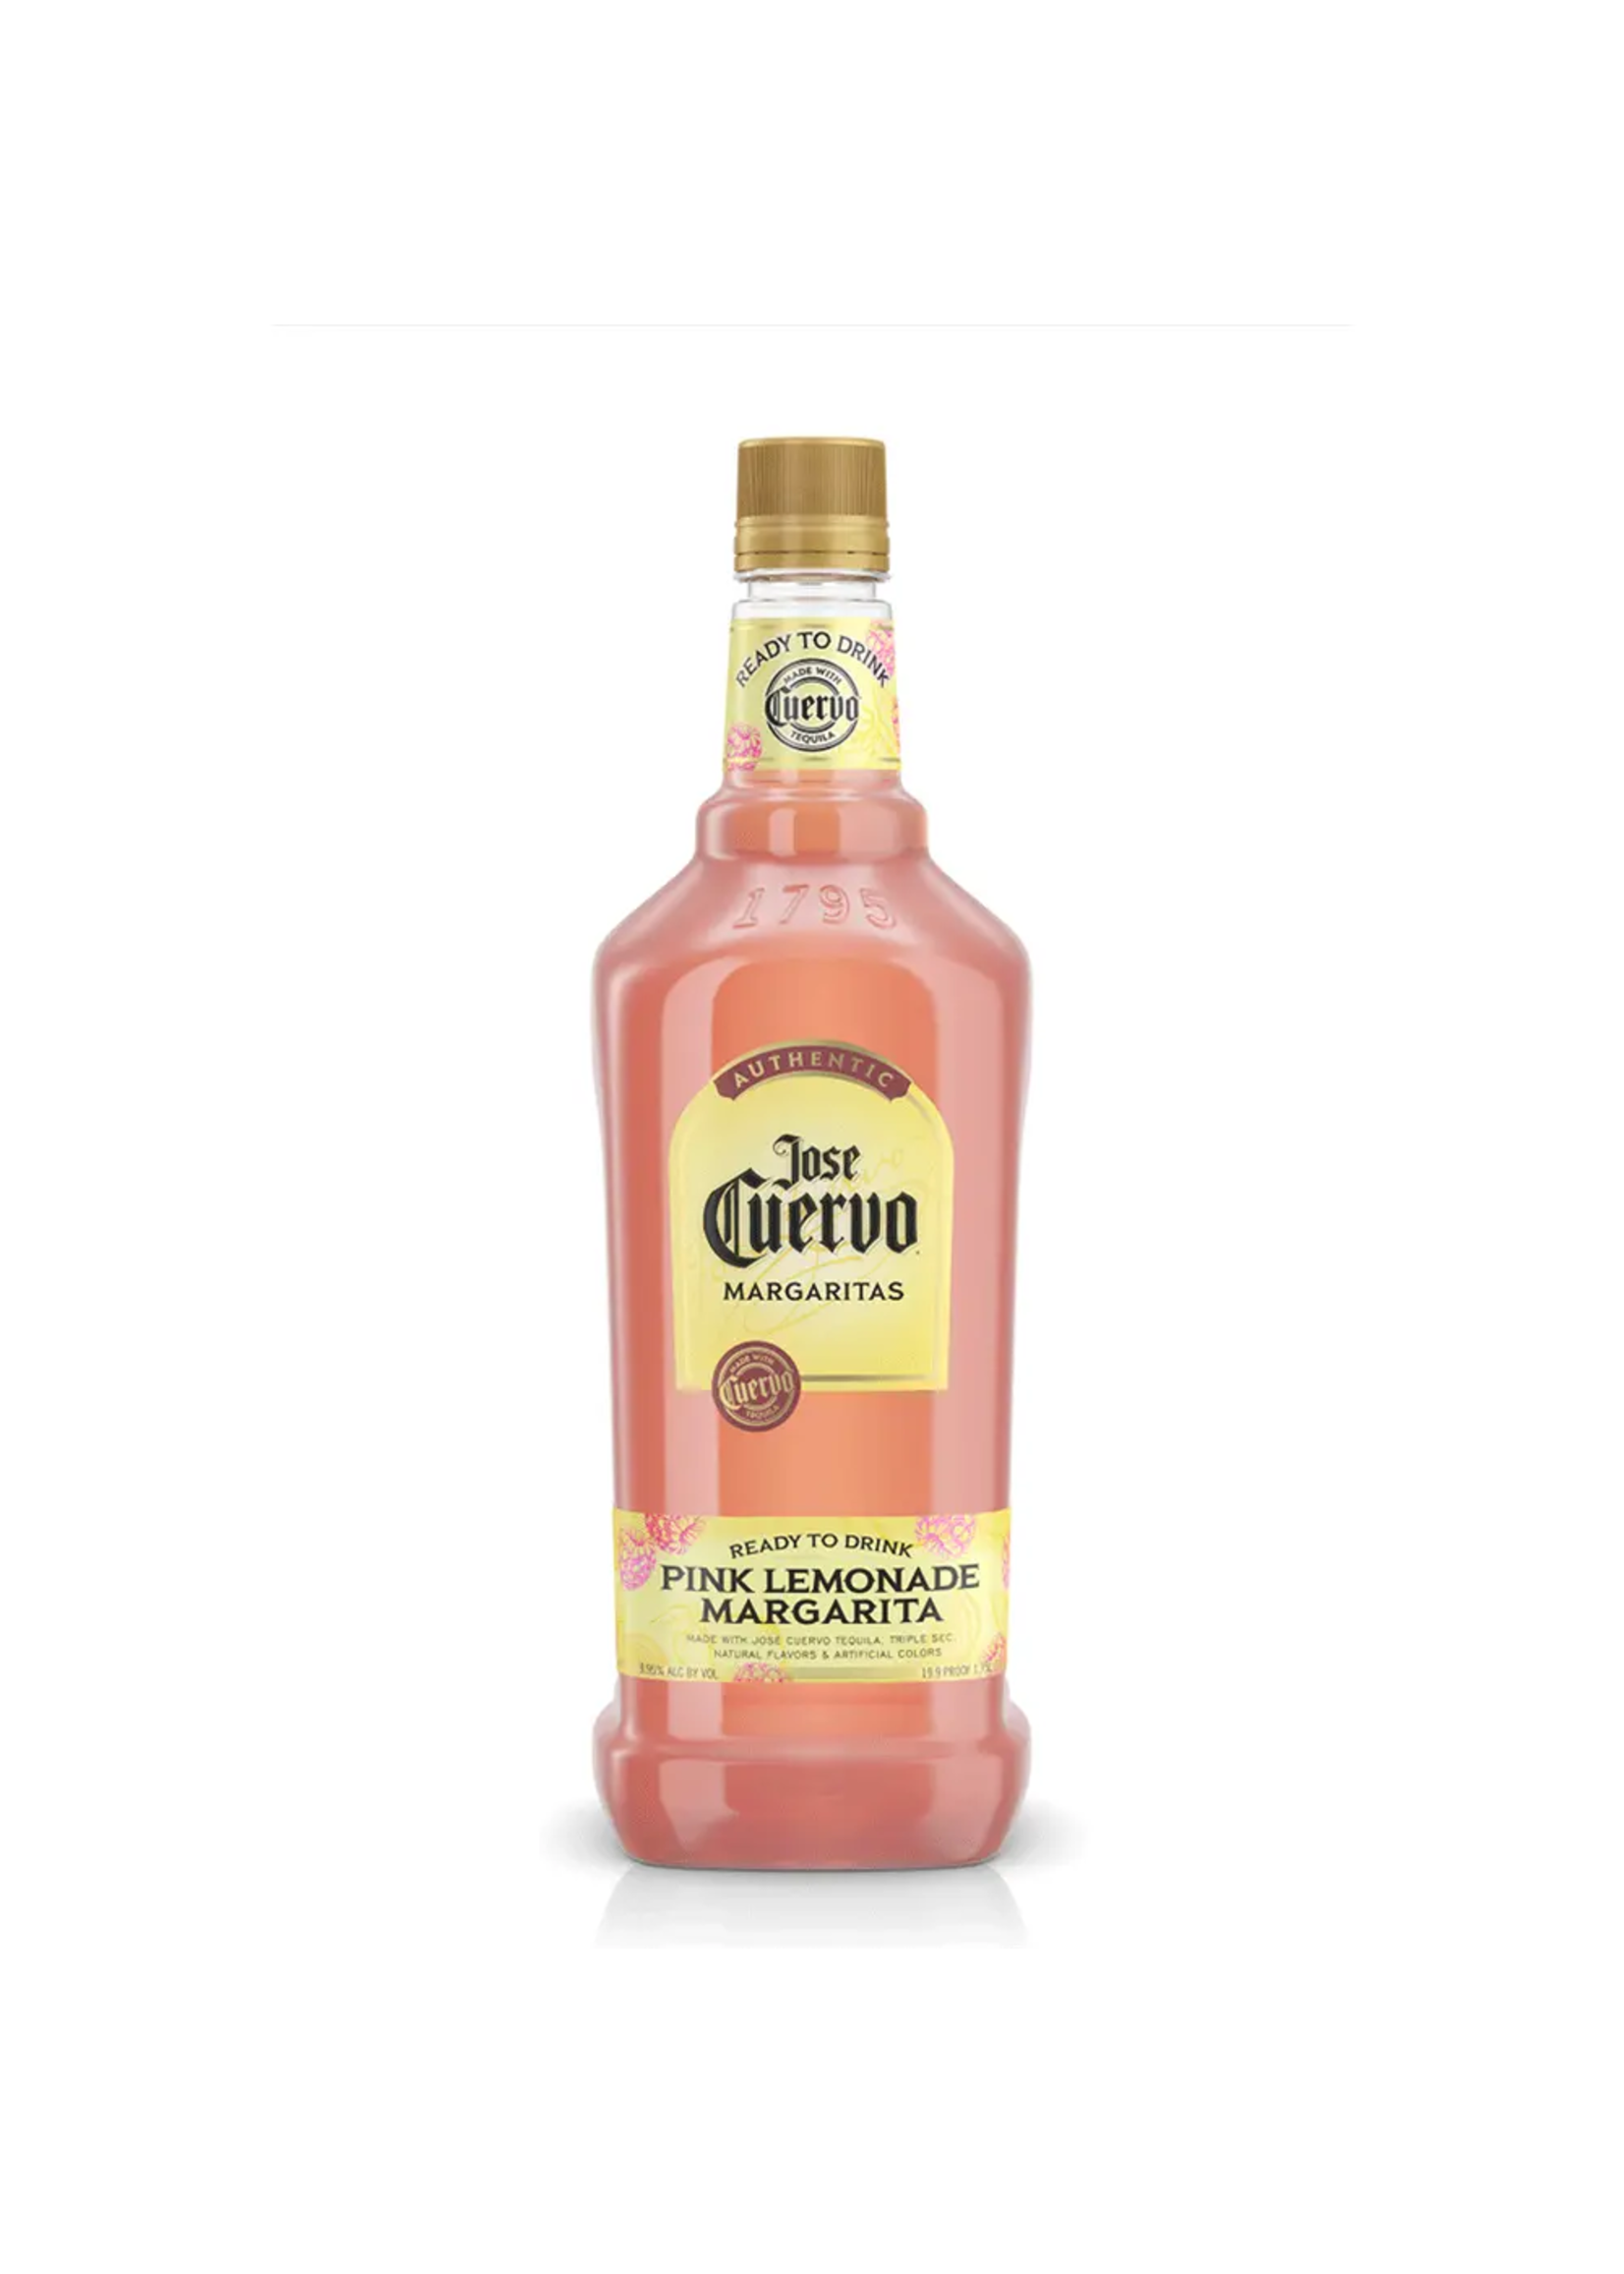 Jose Cuervo Ready to Drink Jose Cuervo Rtd Auth Pink Lemonade Margarita 19.9Proof Pet 1.75 LTR